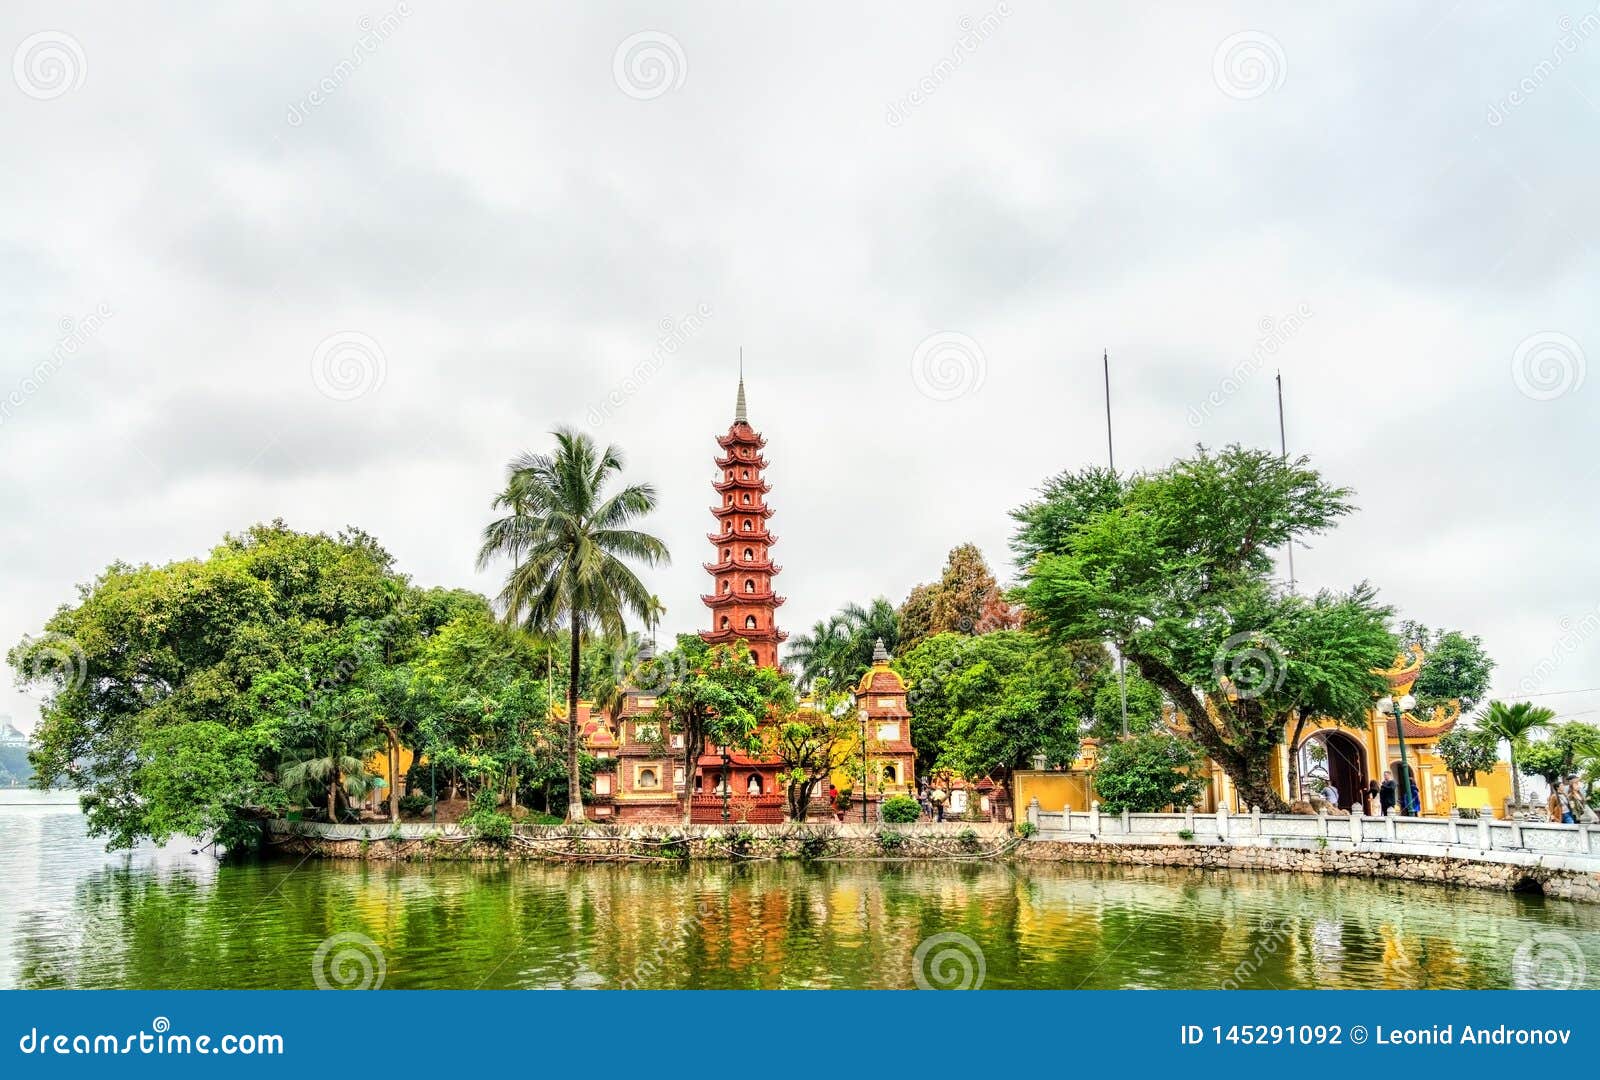 tran quoc pagoda in hanoi, vietnam